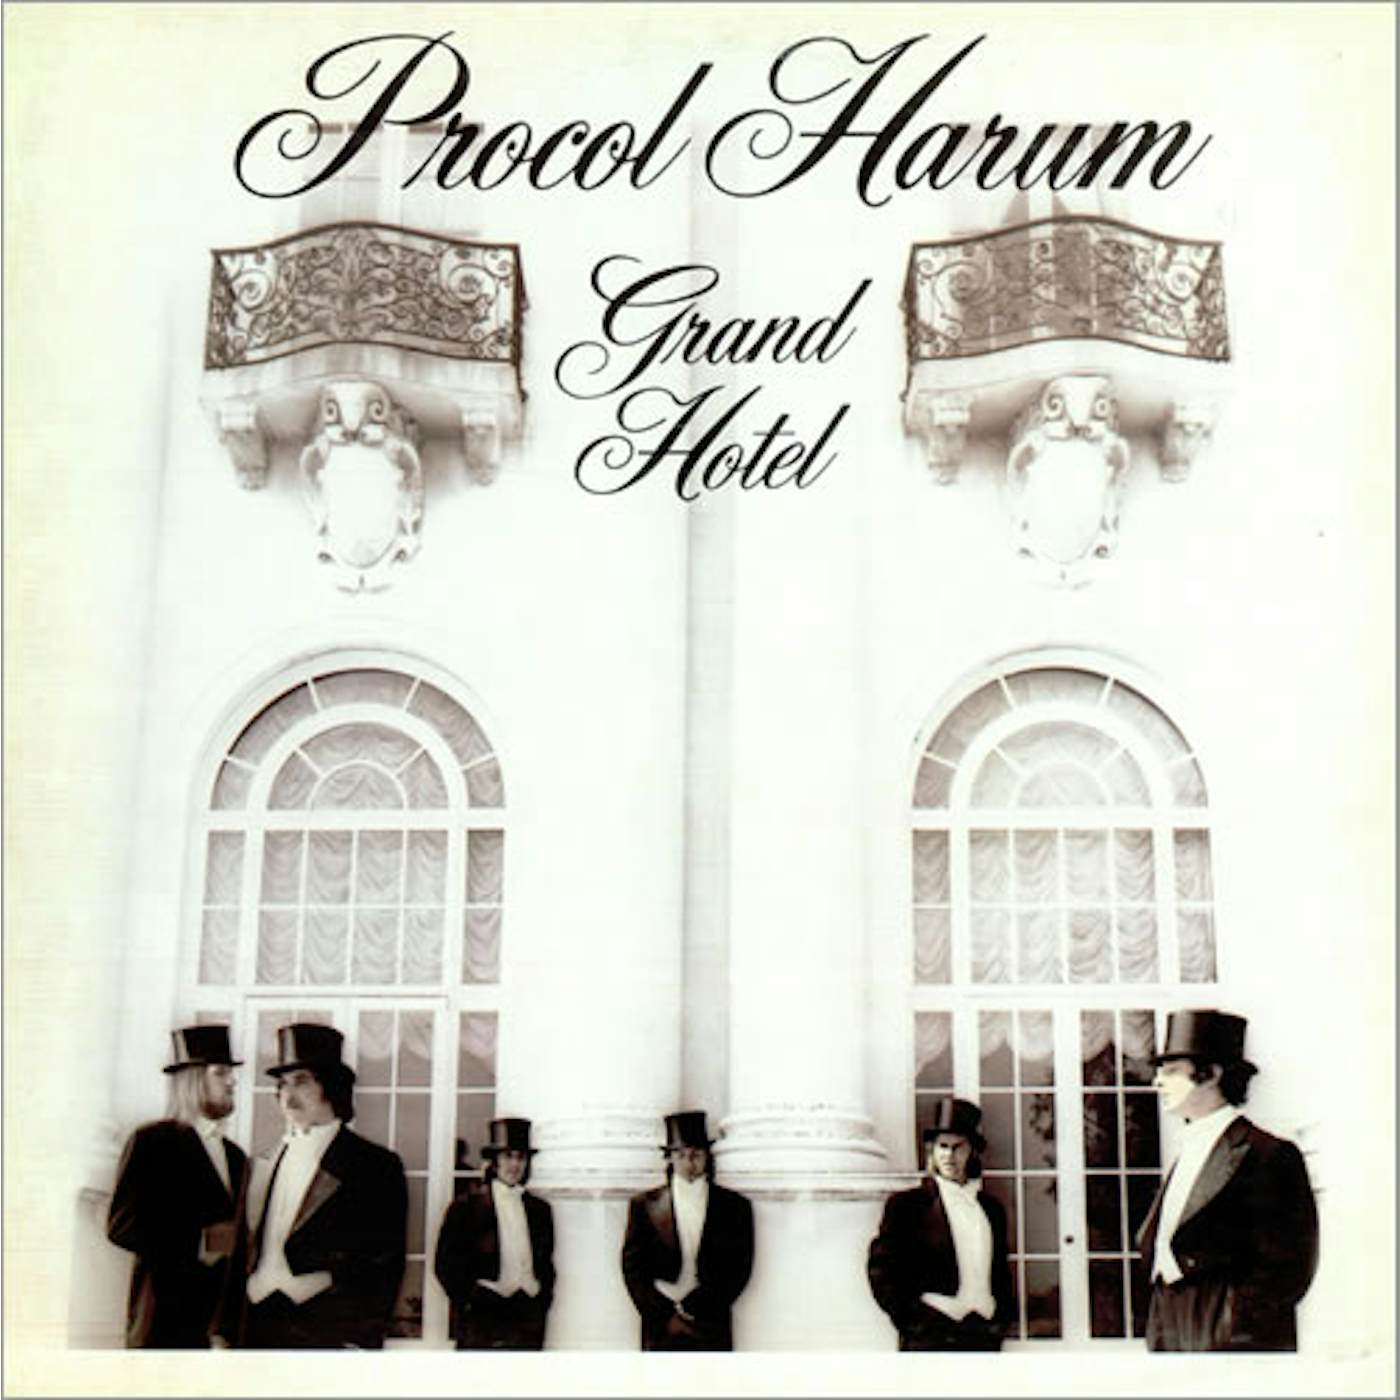 Procol Harum Grand Hotel Vinyl Record